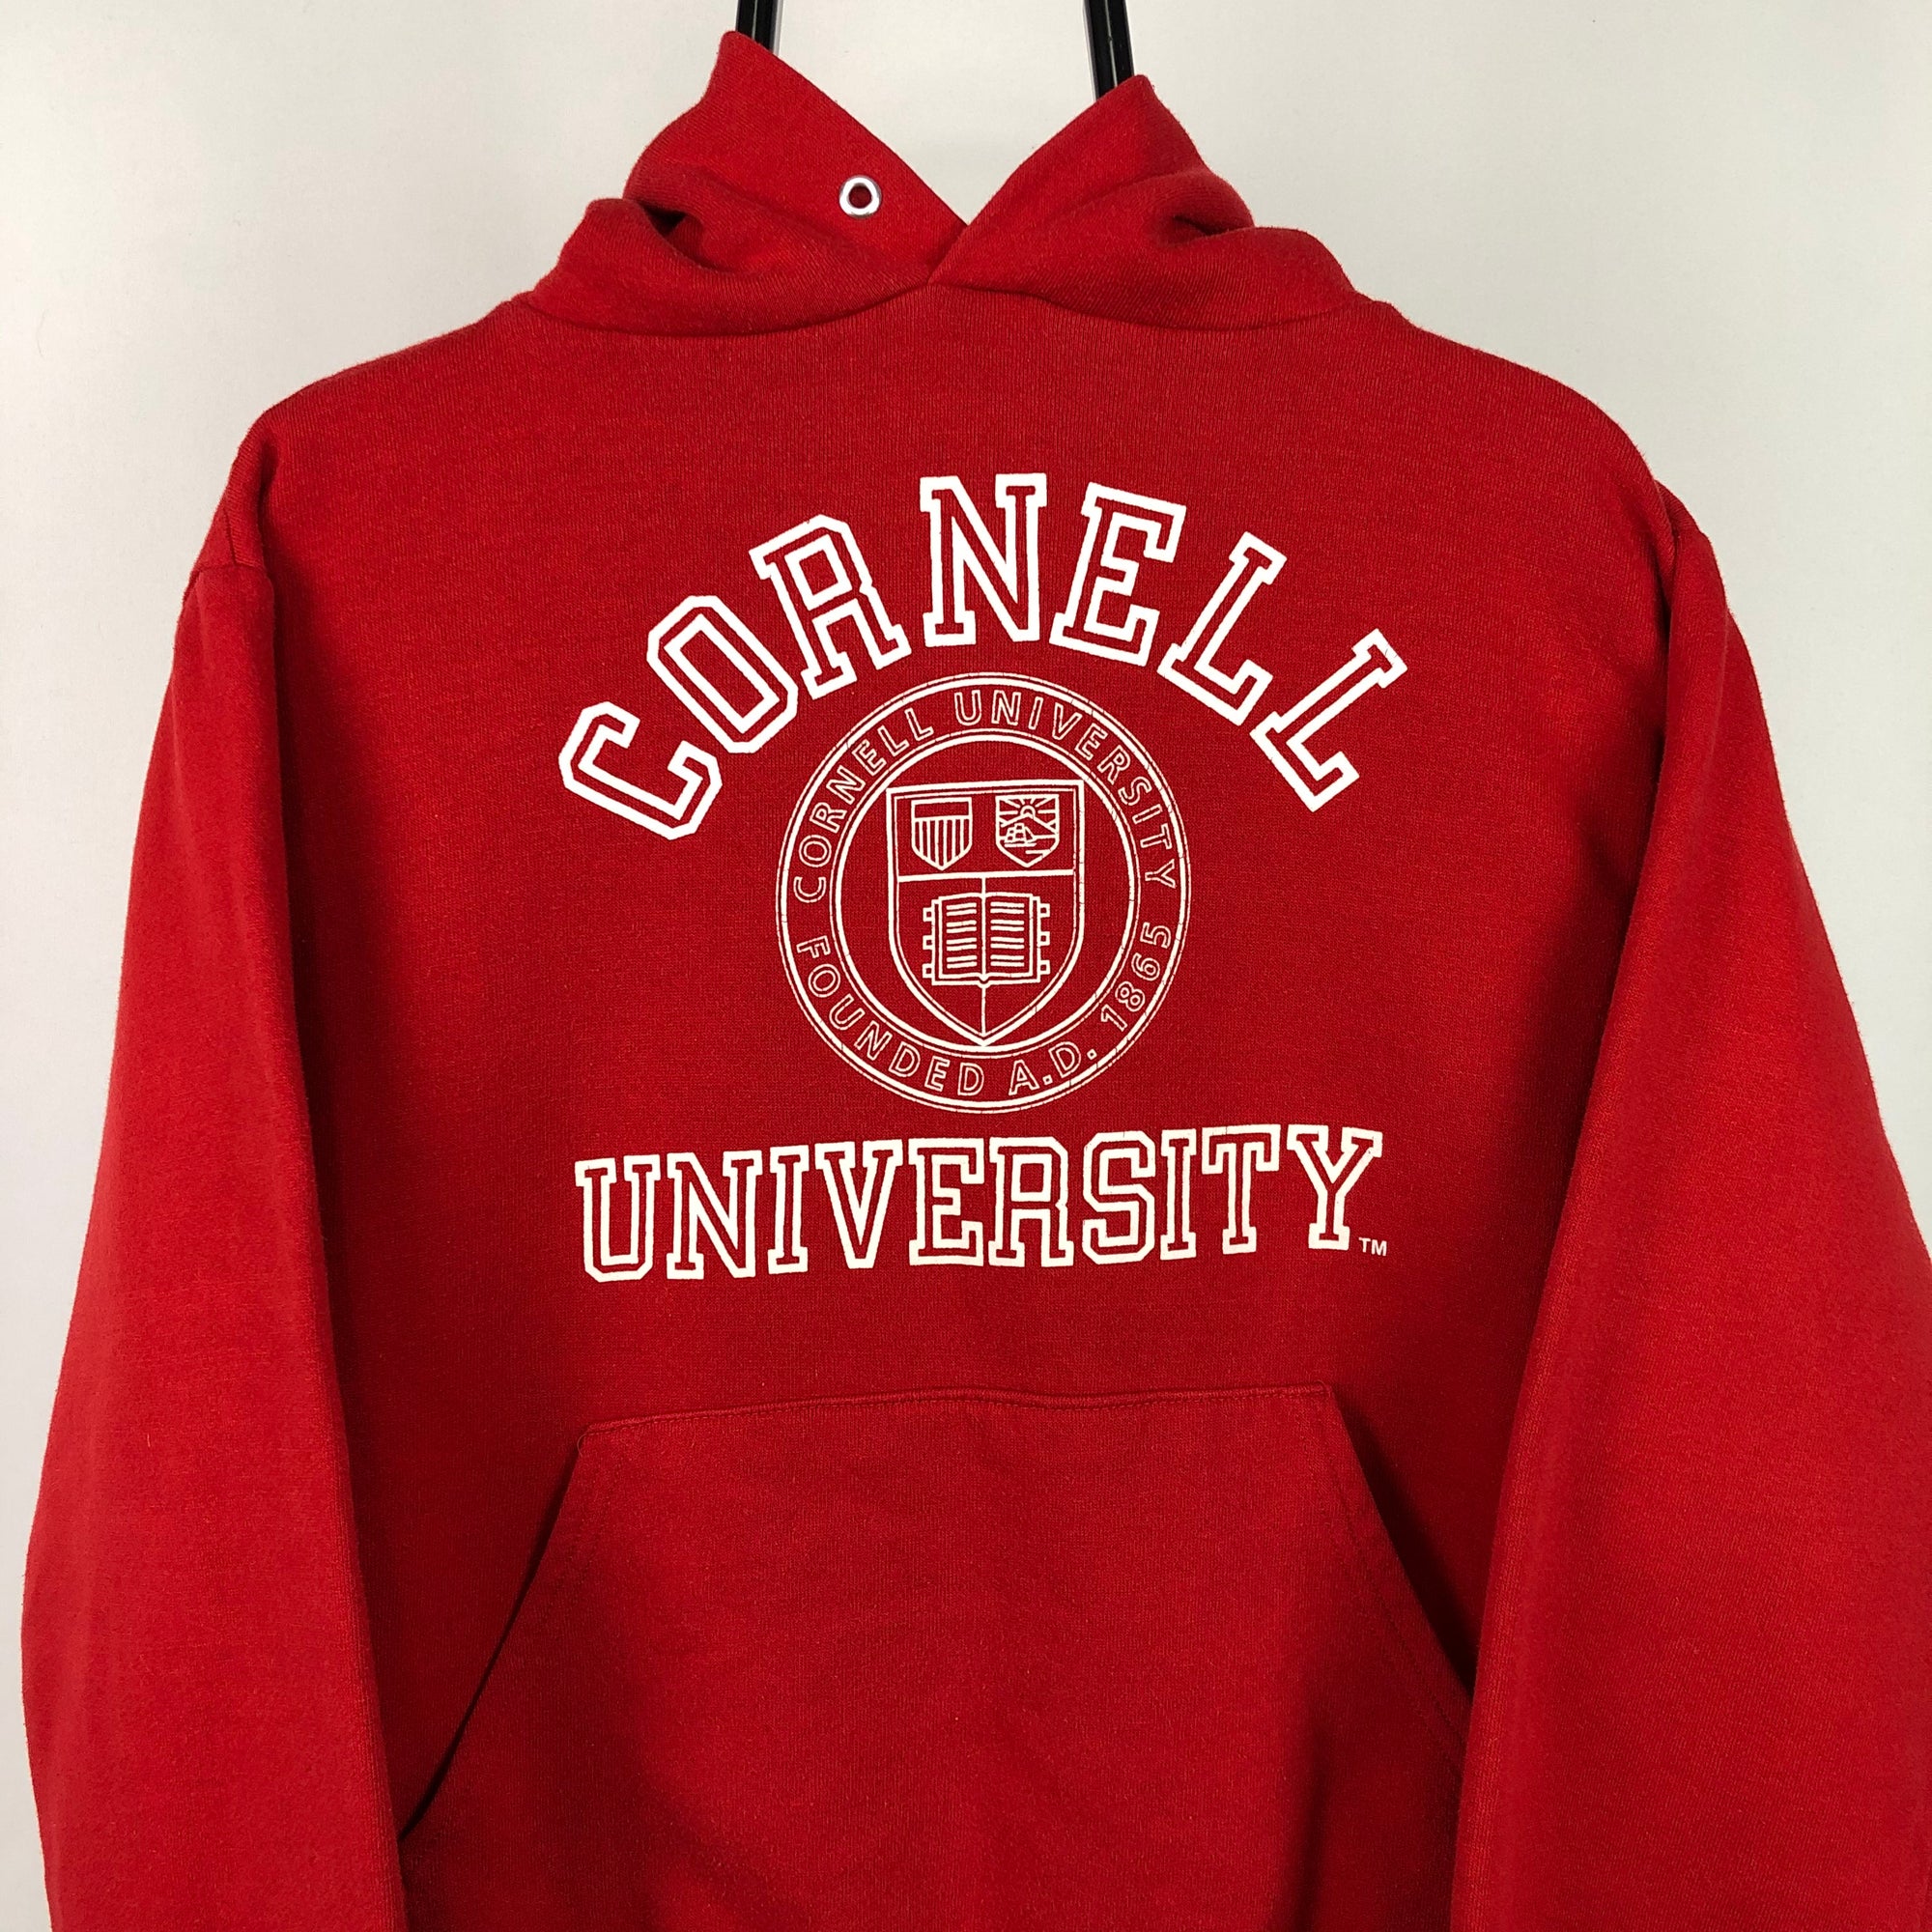 Vintage Cornell University Hoodie in Red - Men's Small/Women's Medium